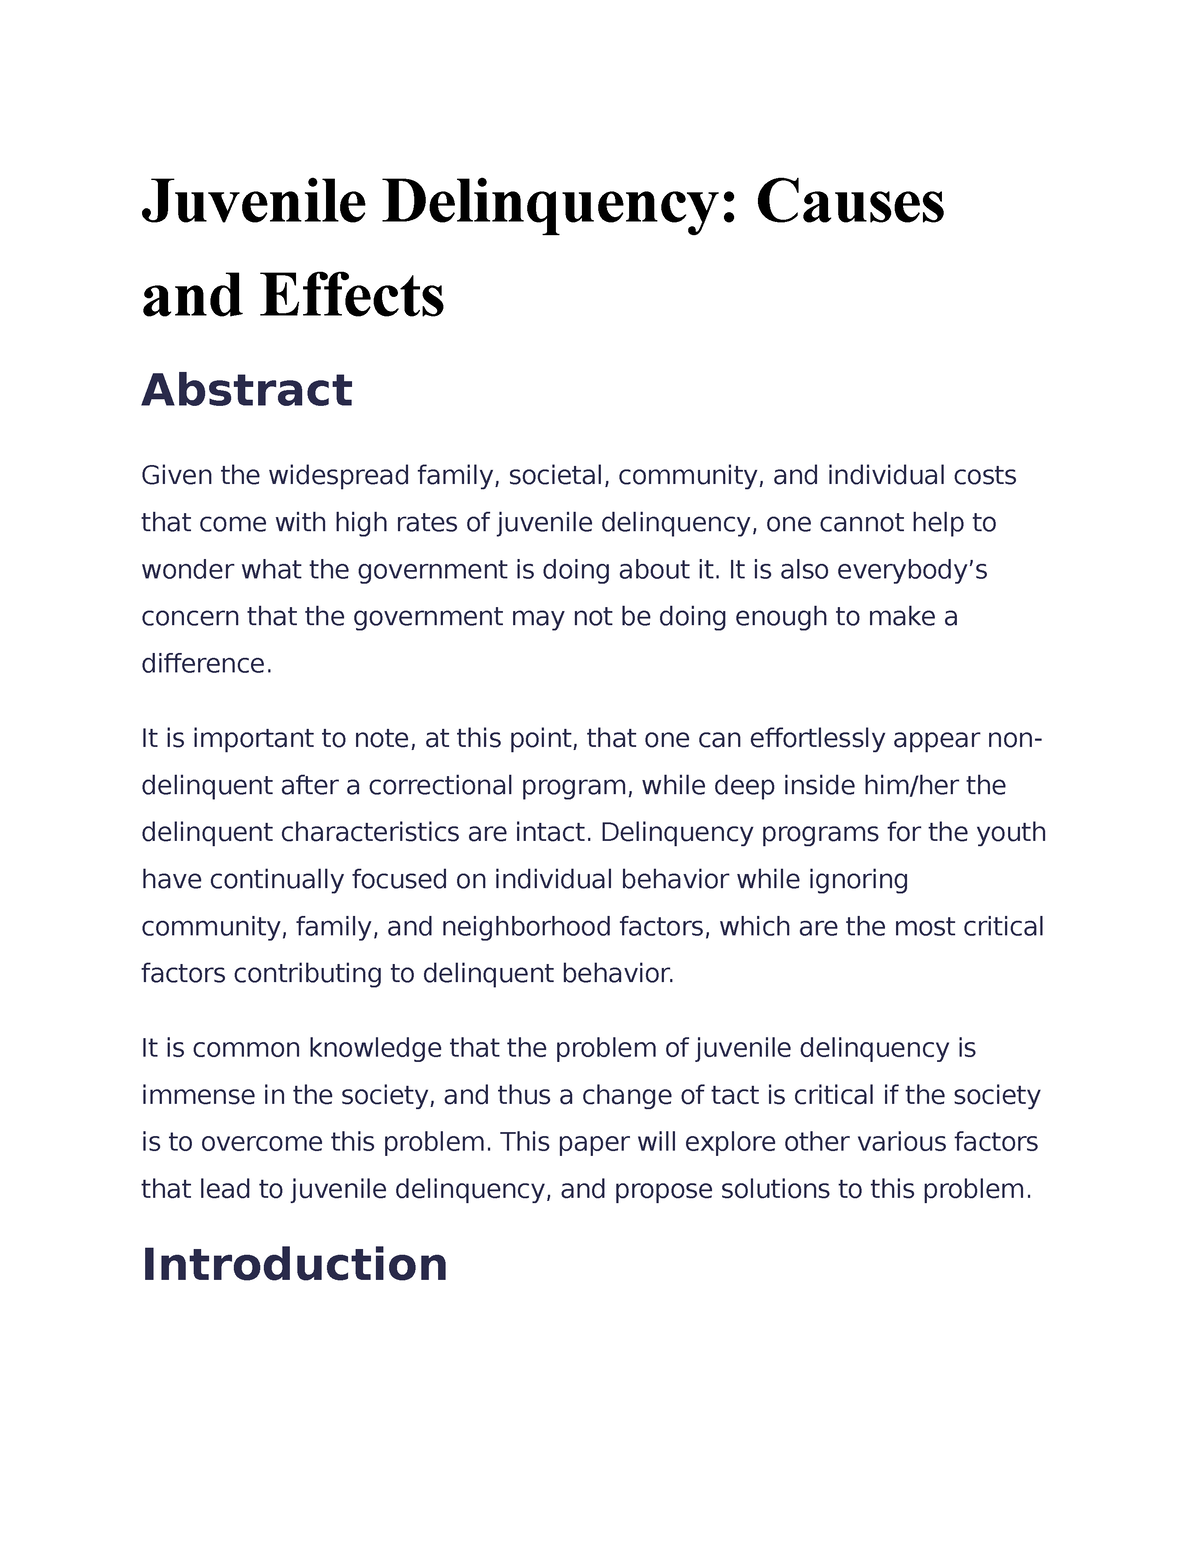 dissertation about juvenile delinquency